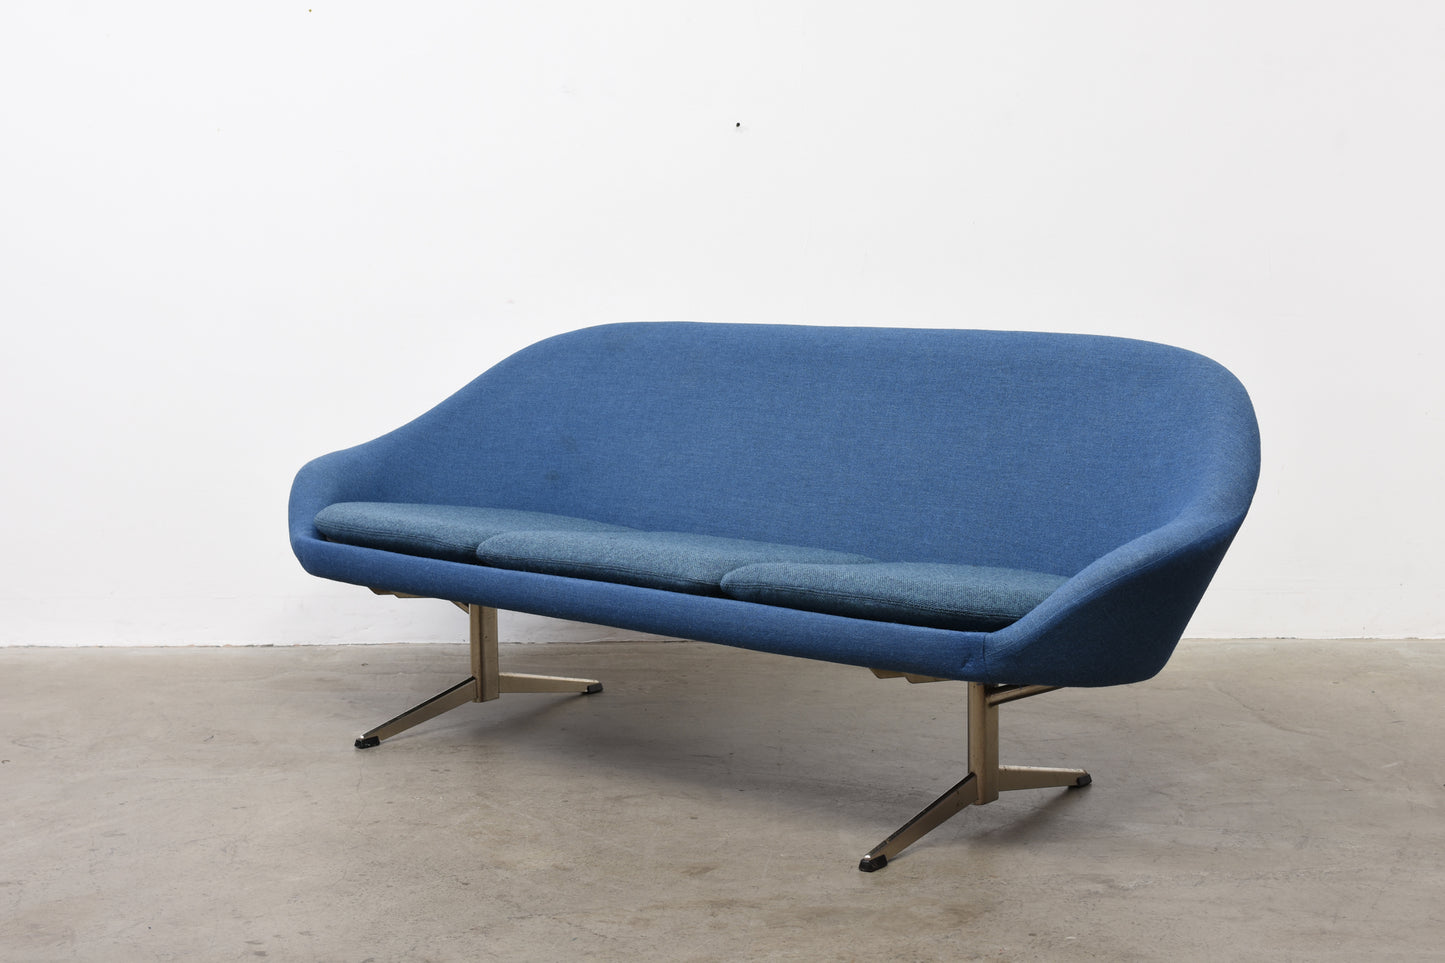 1960s Danish shell sofa